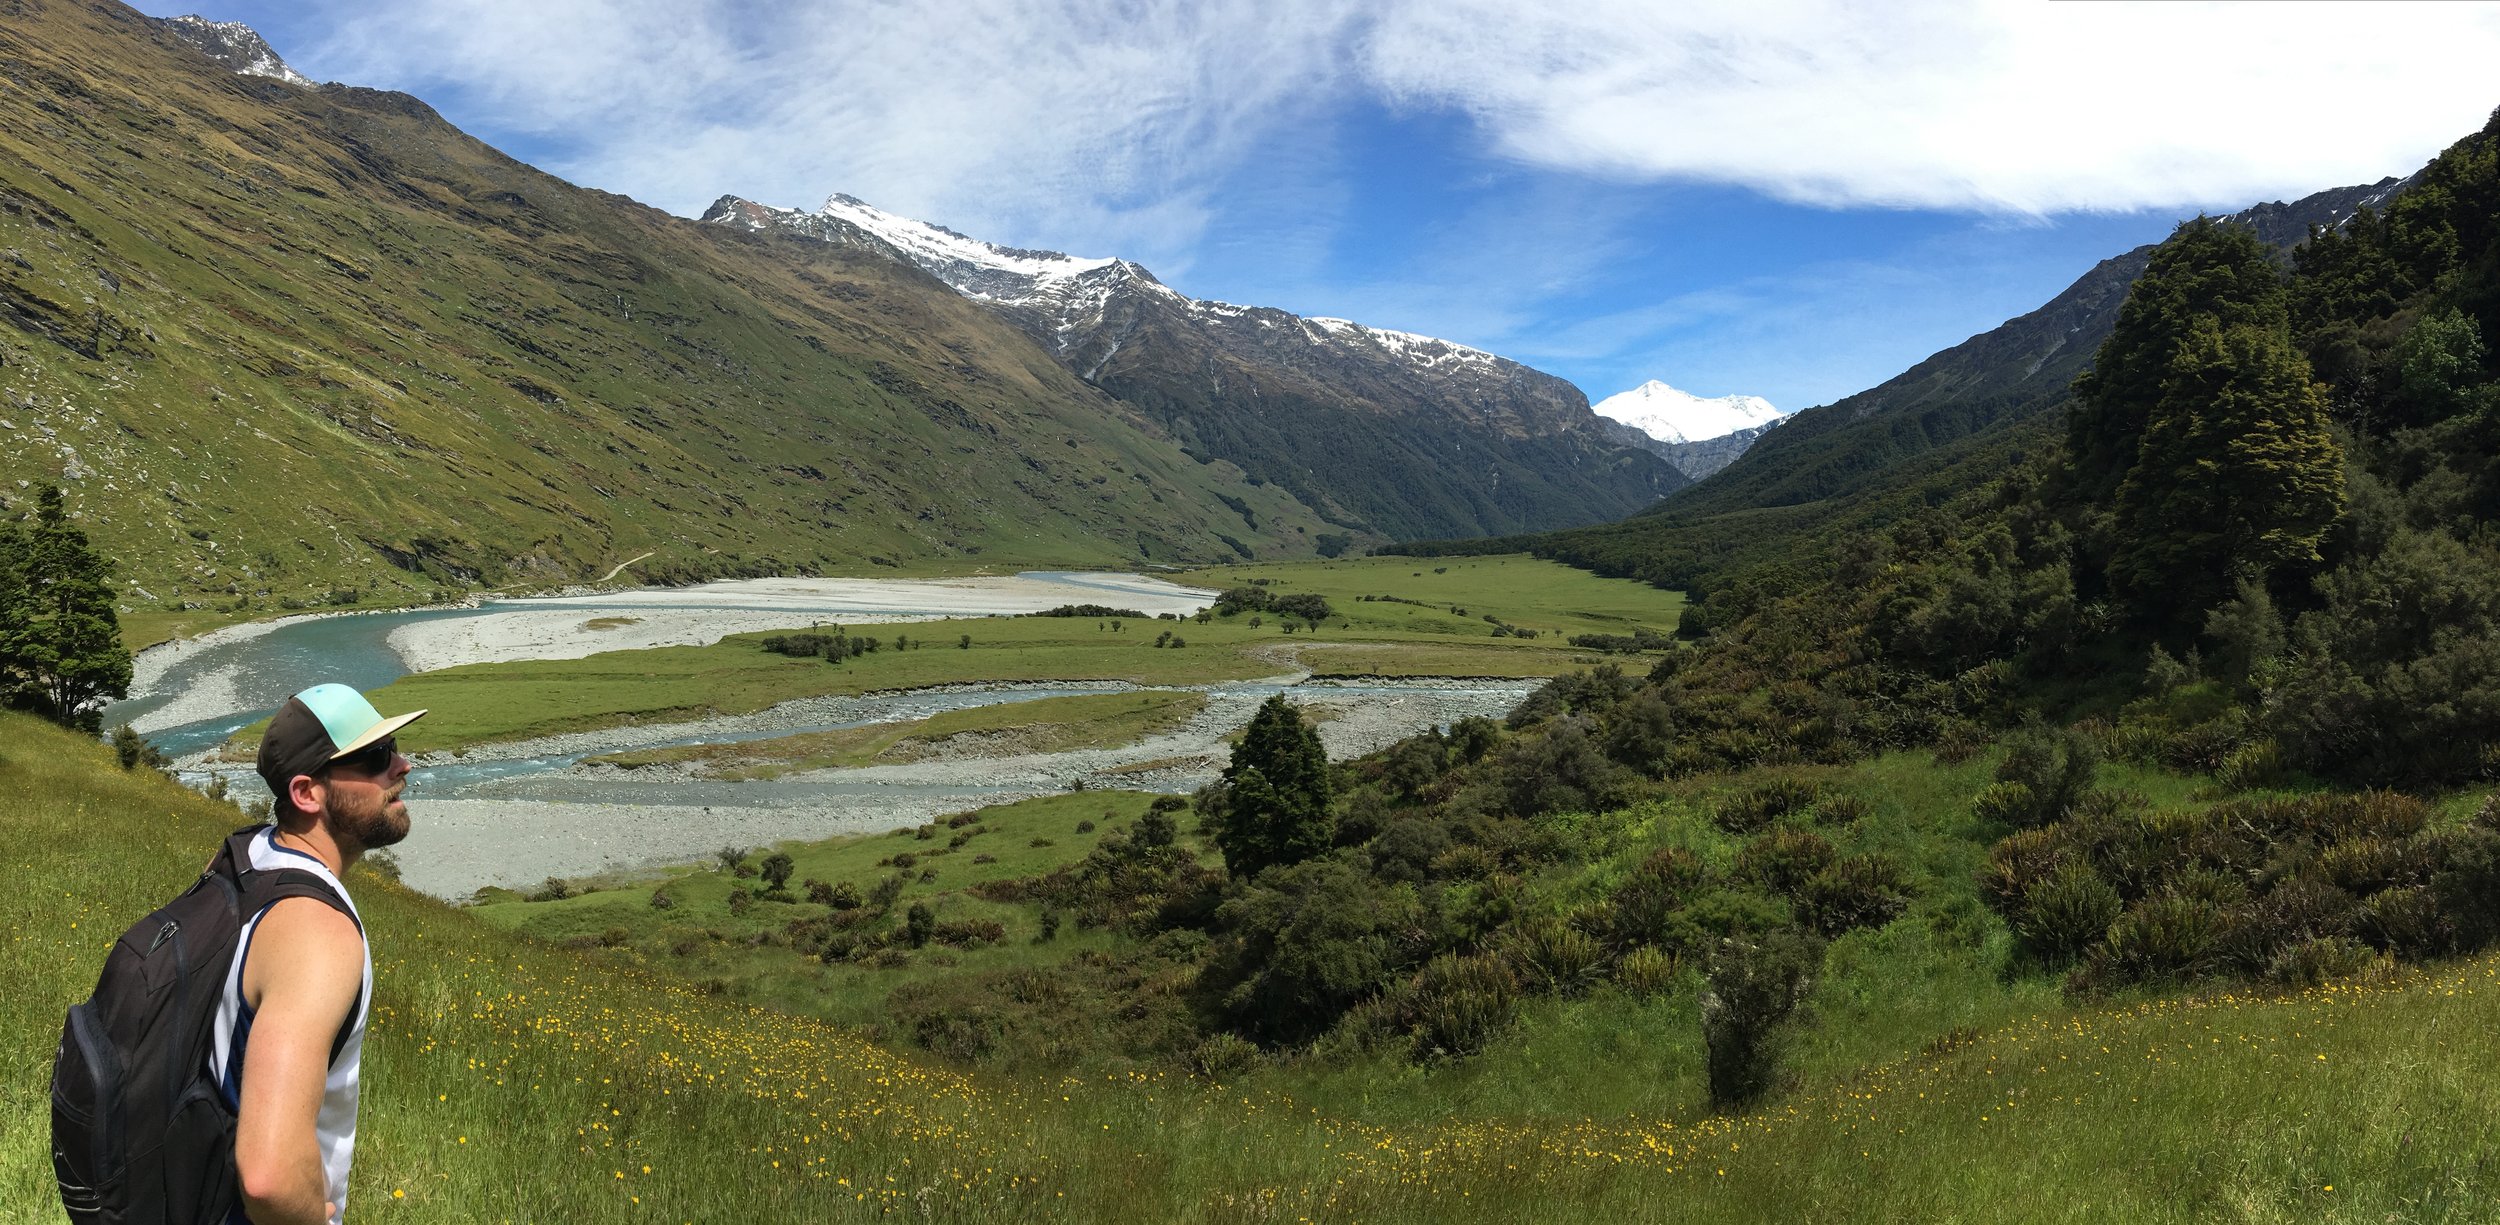   Matukituki River Valley,&nbsp;Otago Region  